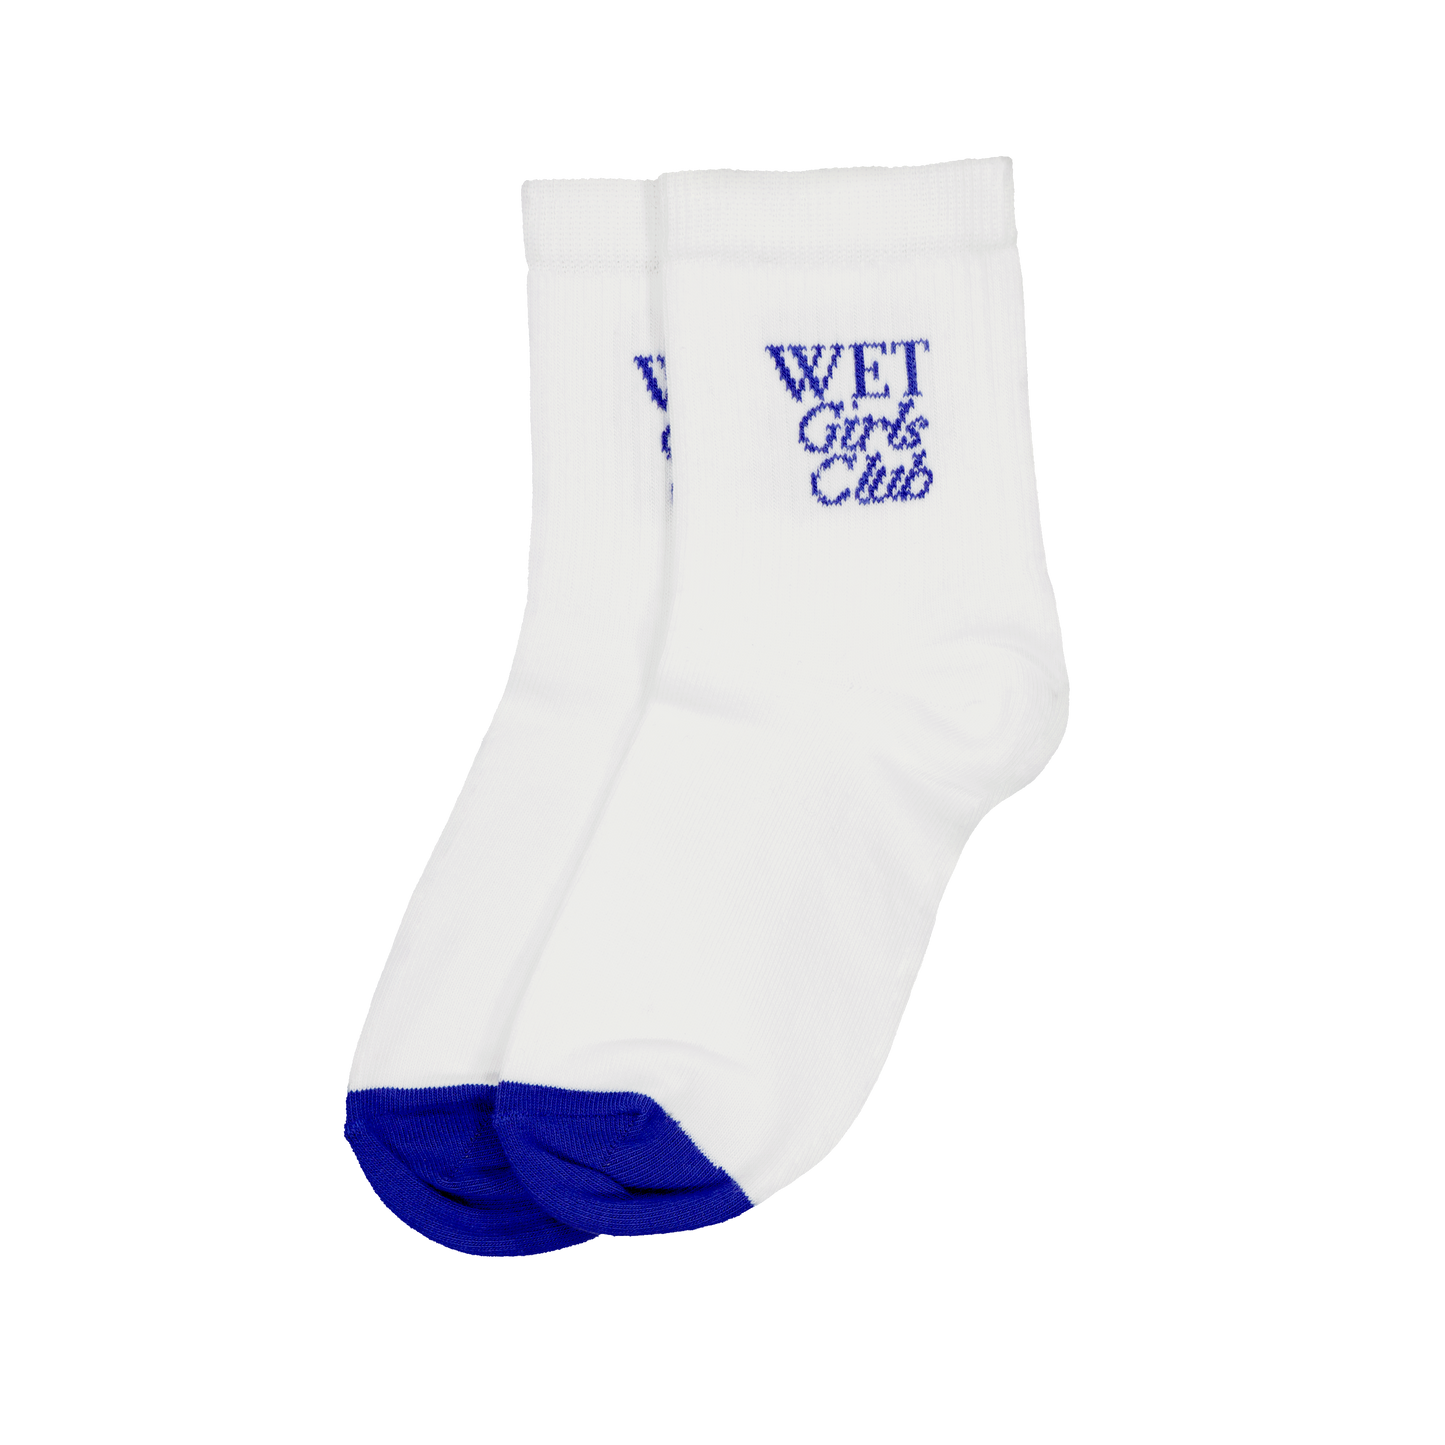 Wet Girls Club Socks